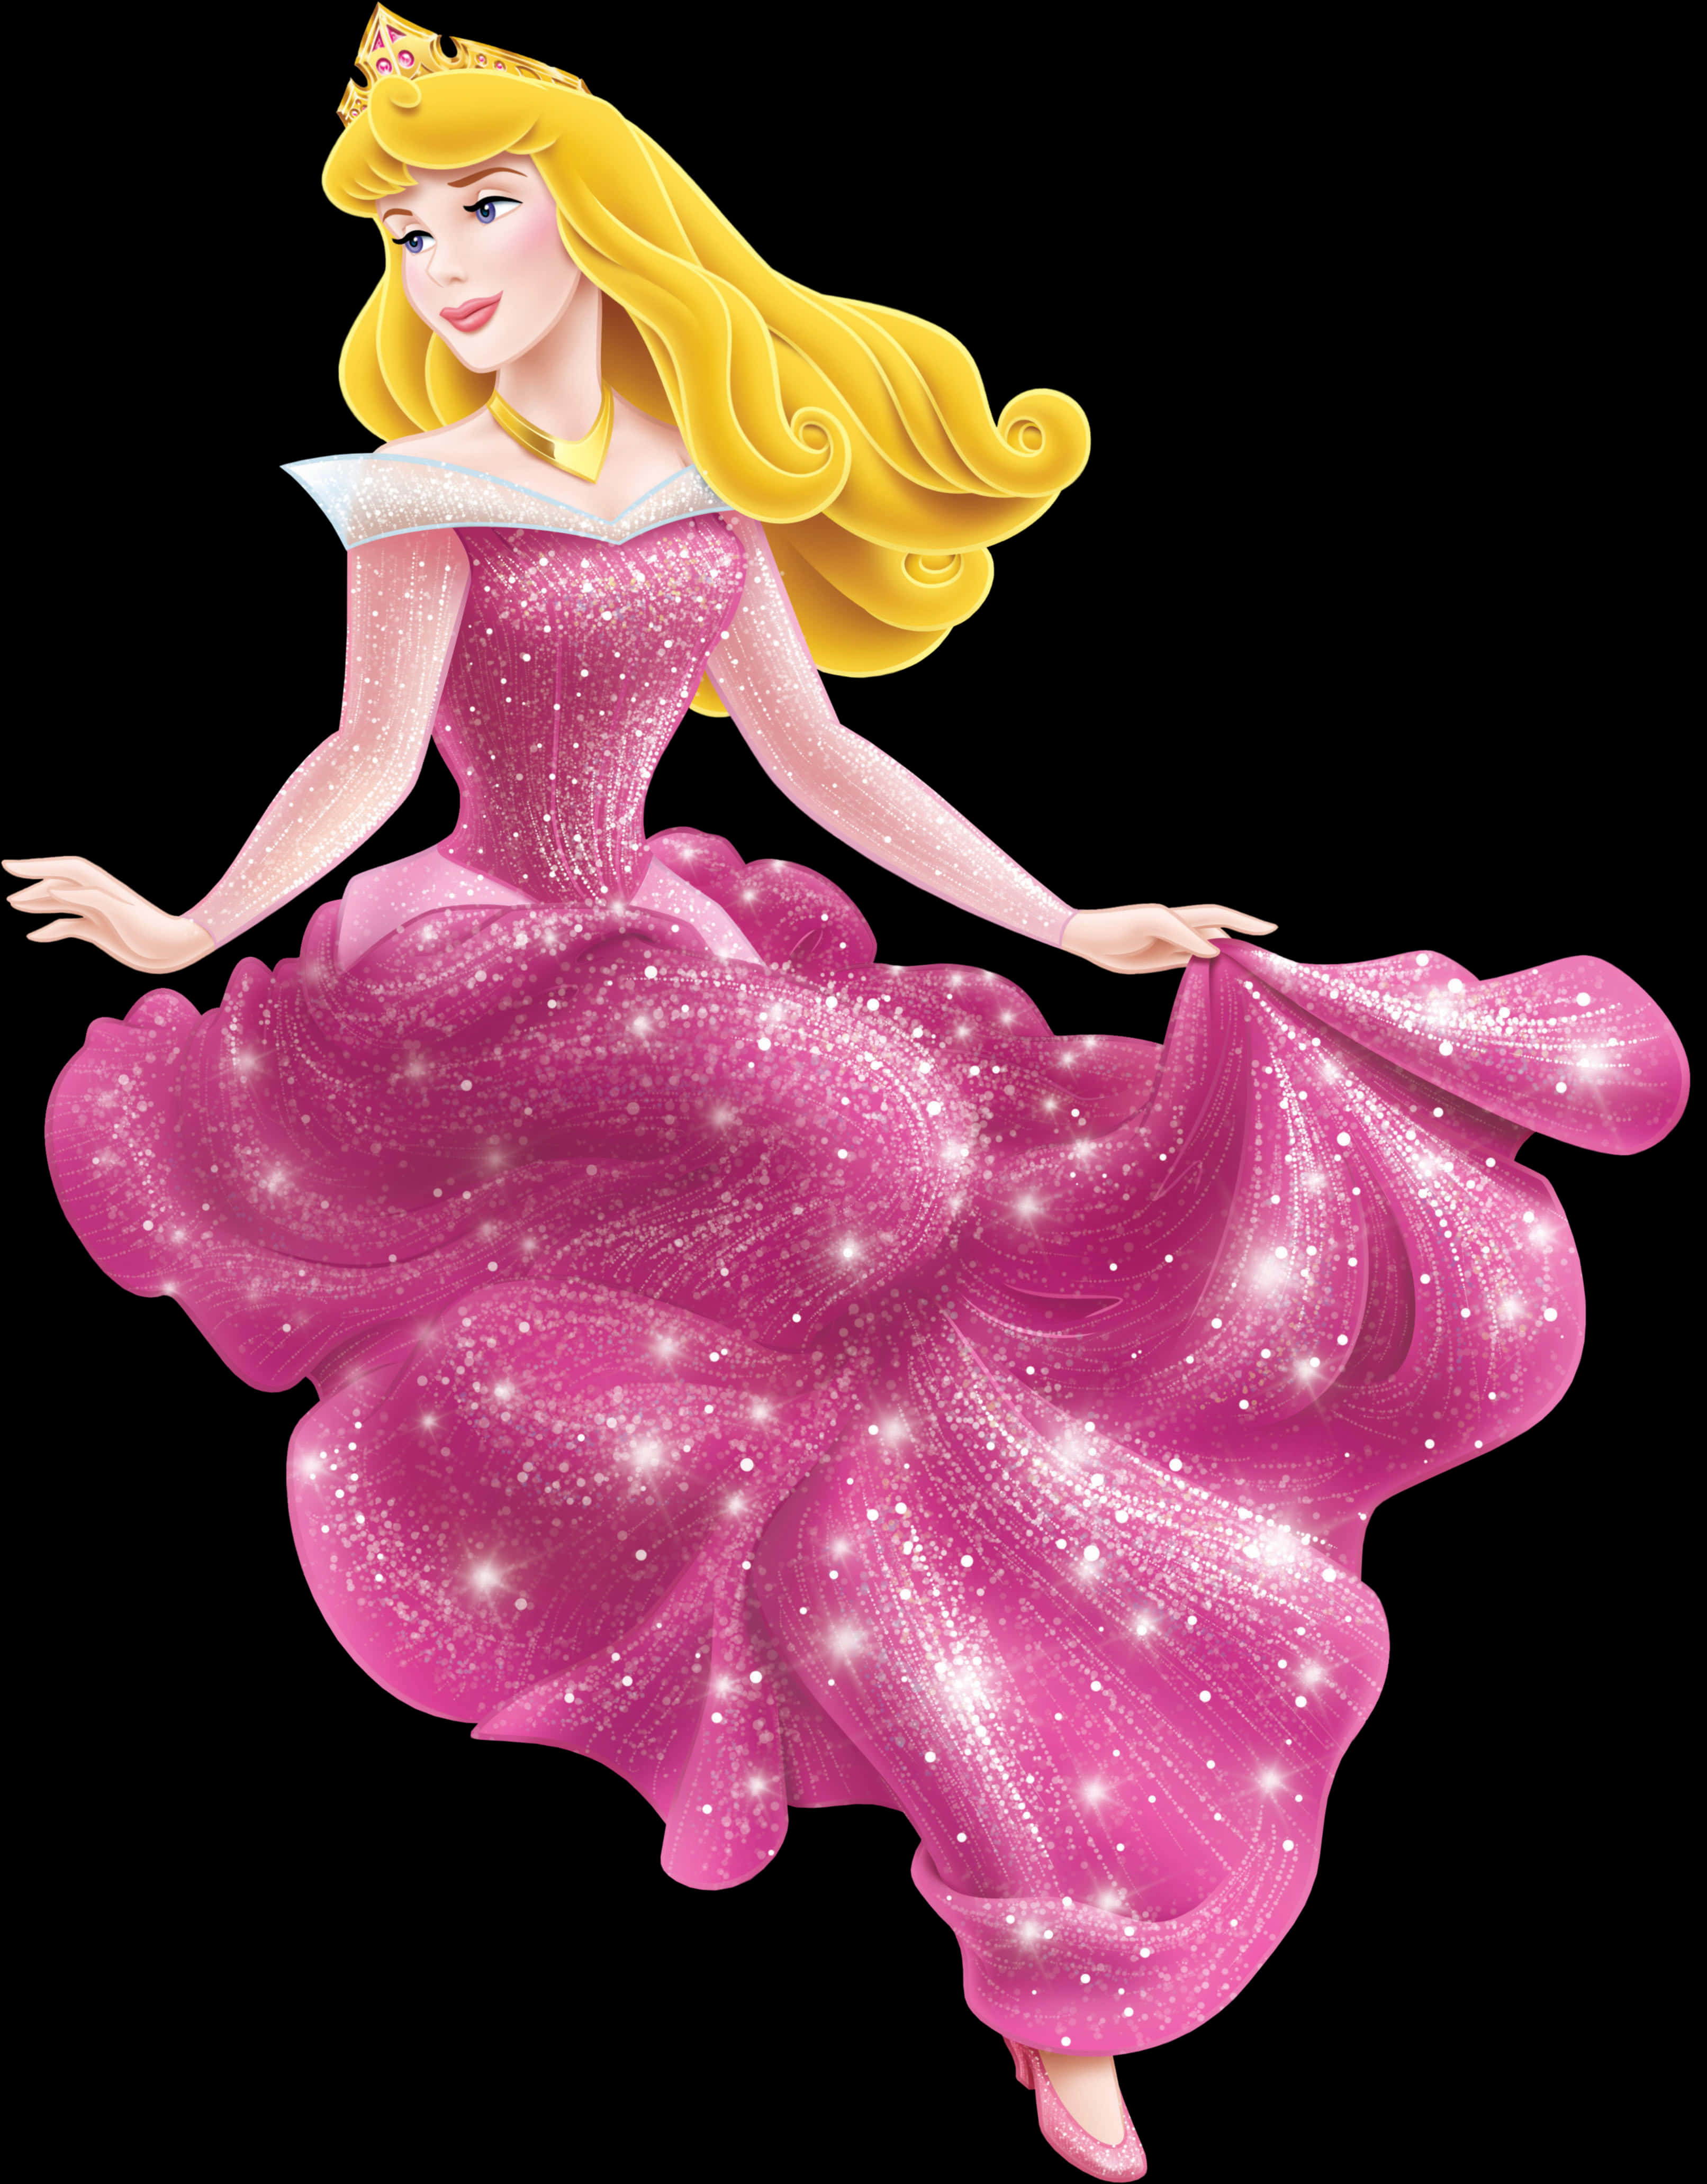 Disney Princess Aurora With Glittery Dress